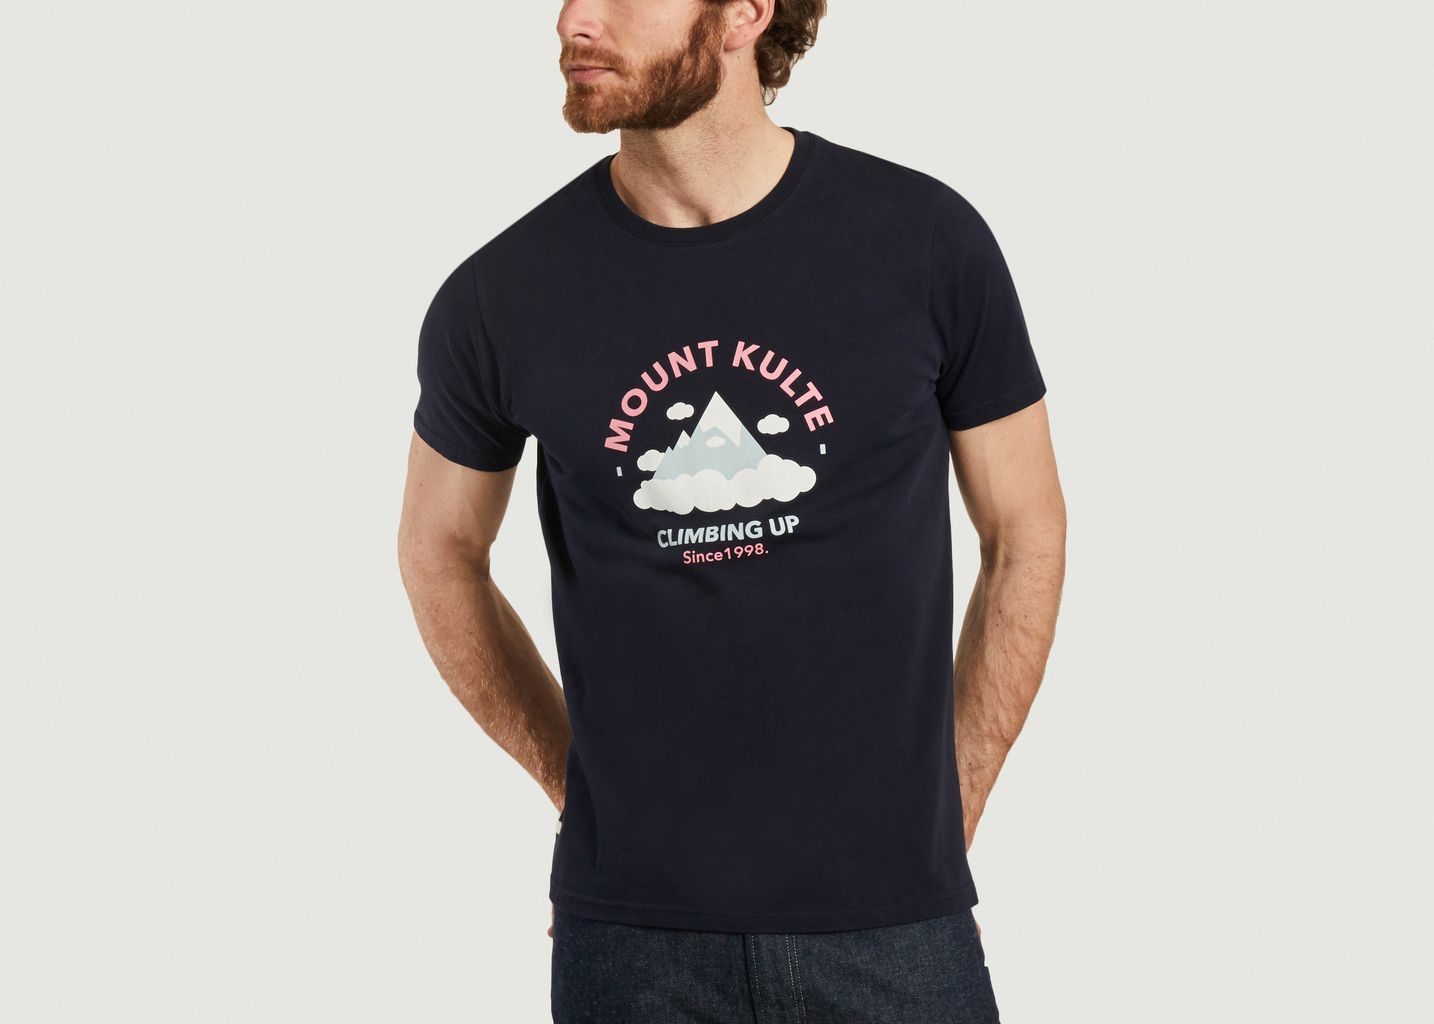 Kulte Mount T-shirt - Kulte